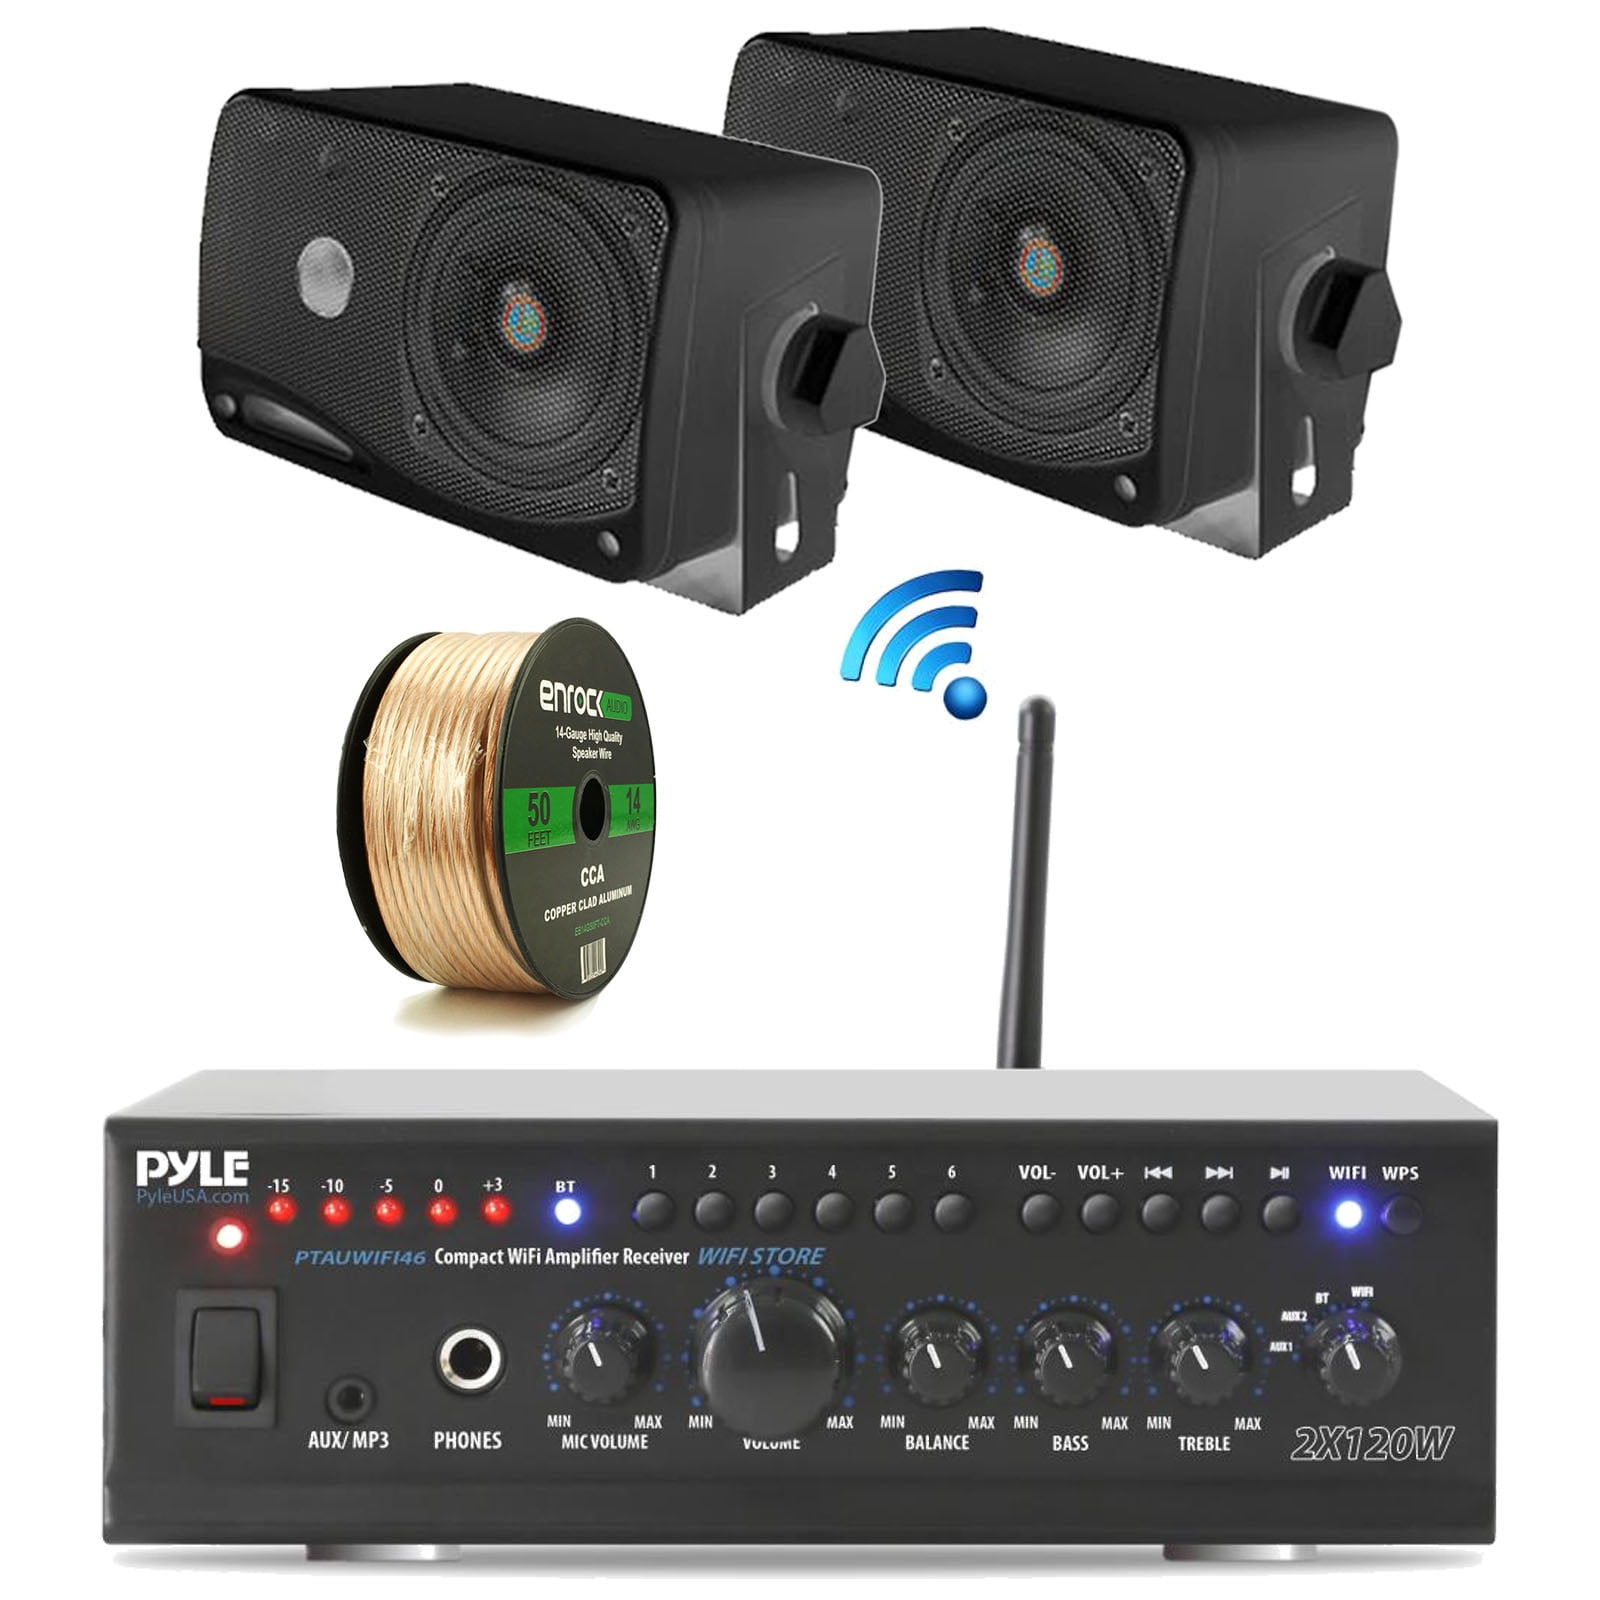 Pyle PTAUWIFI46 WiFi Stereo Amplifier 240-Watt Home Theatre Receiver, 2x Pyle 3.5" 200 Watt 3-Way Weatherproof Mini Box Speakers (Black), Enrock Audio Spool of 50 Foot 14-Gauge Speaker Wire - Walmart.com